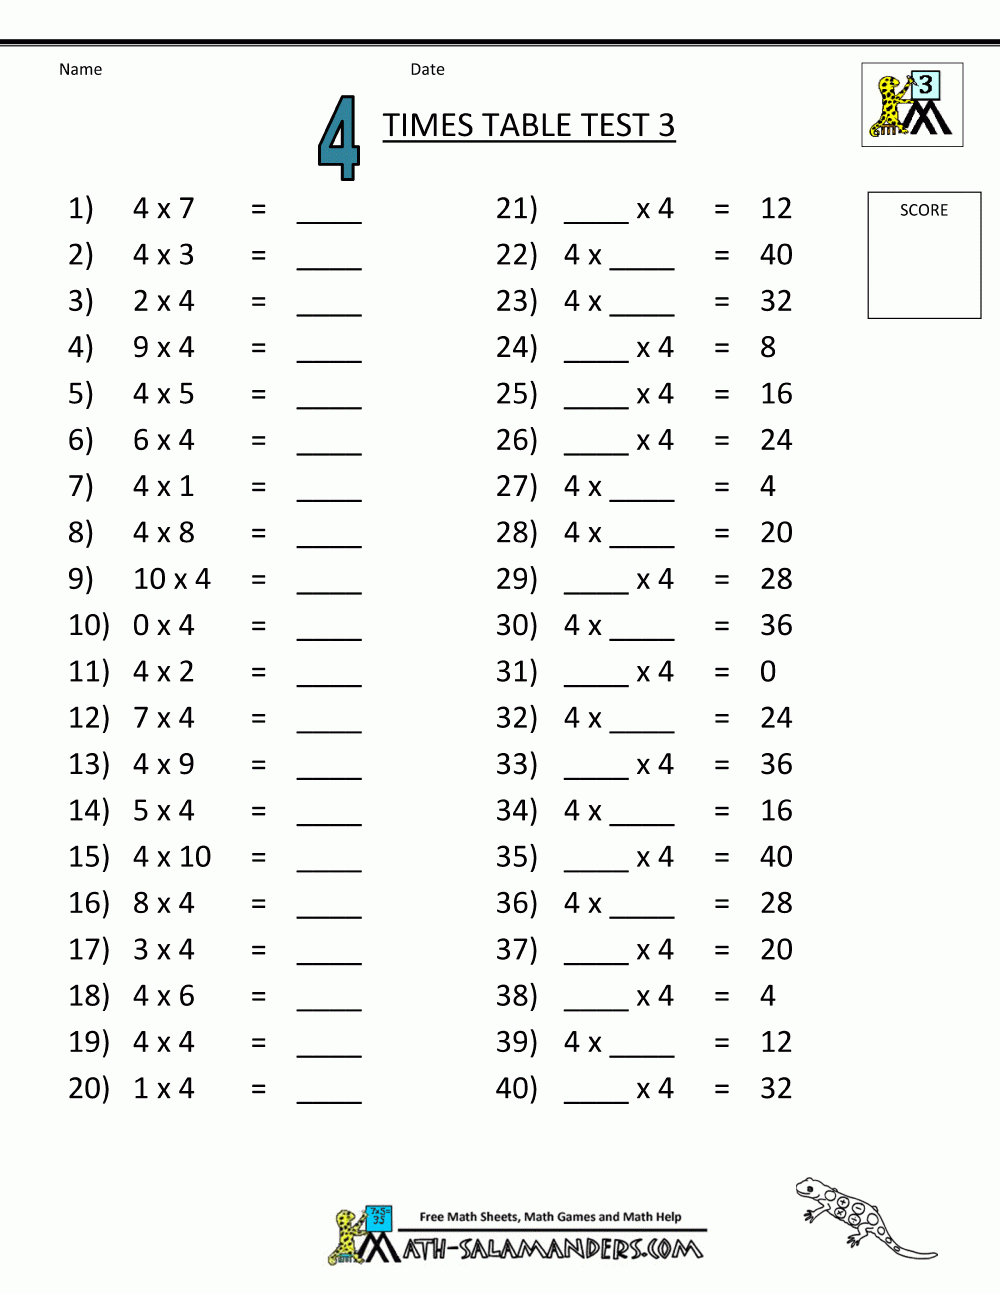  Multiplication Worksheets X3 And X4 PrintableMultiplication